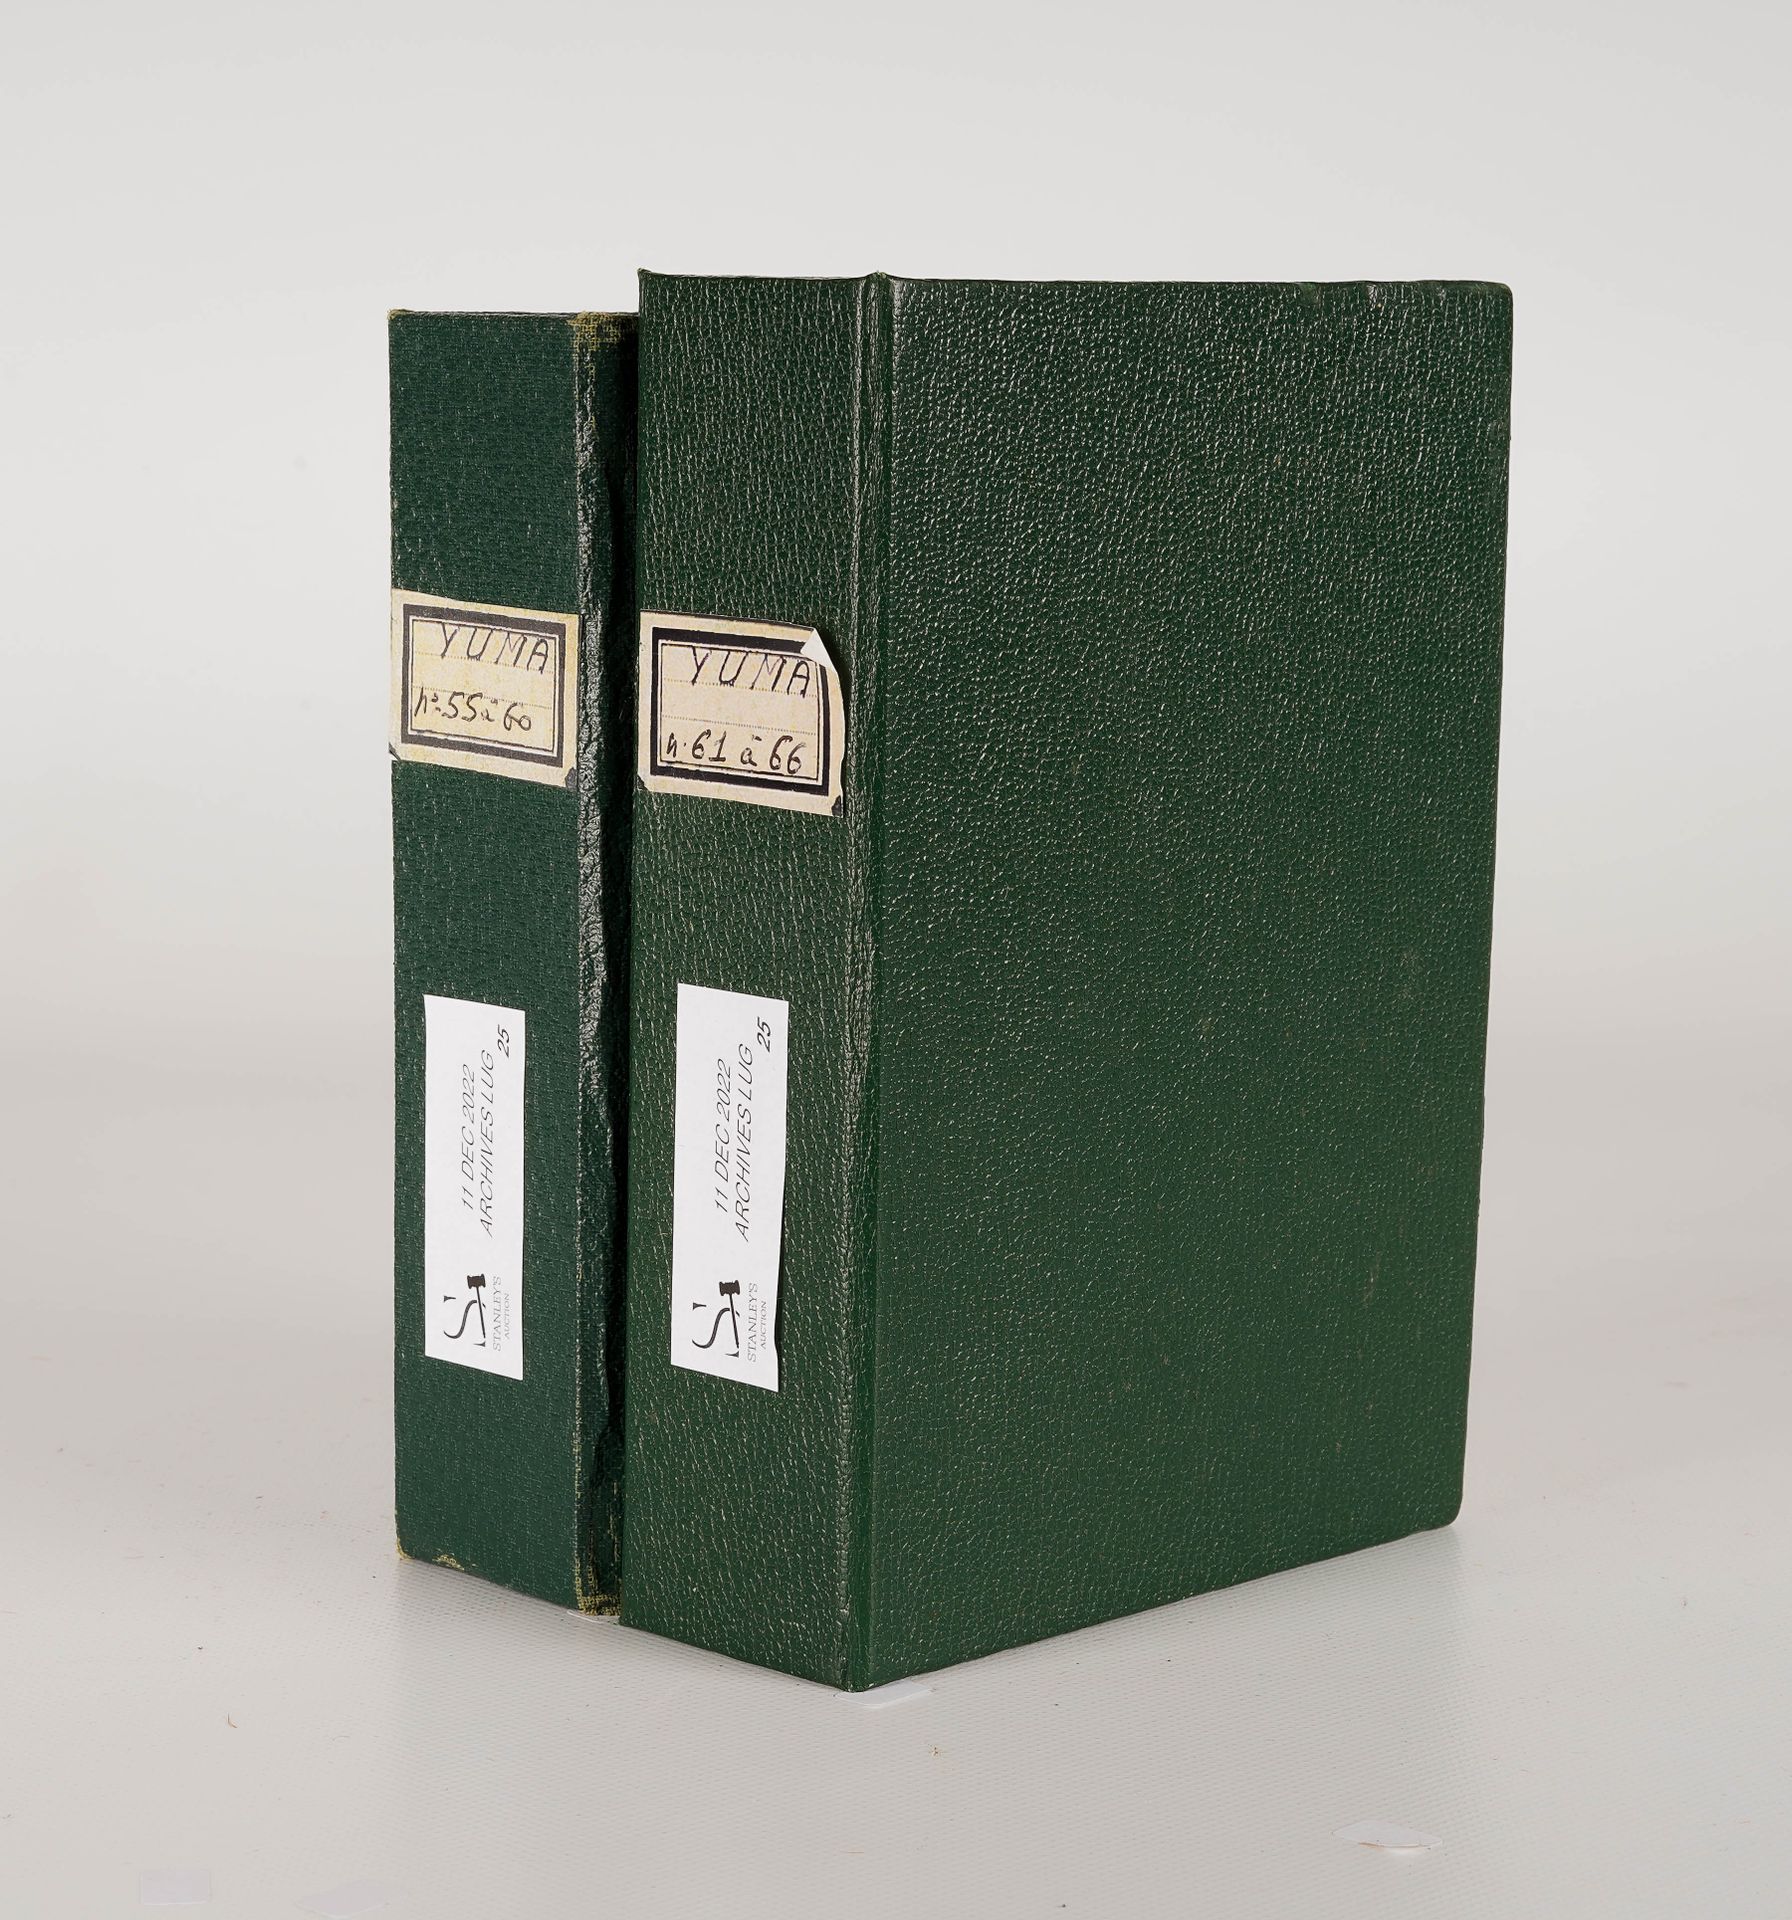 LUG SEMIC, ARCHIVES COMICS 两个LUG活页夹，上面有YUMA第55至66号，绿色布，尺寸为H 18 x 13厘米